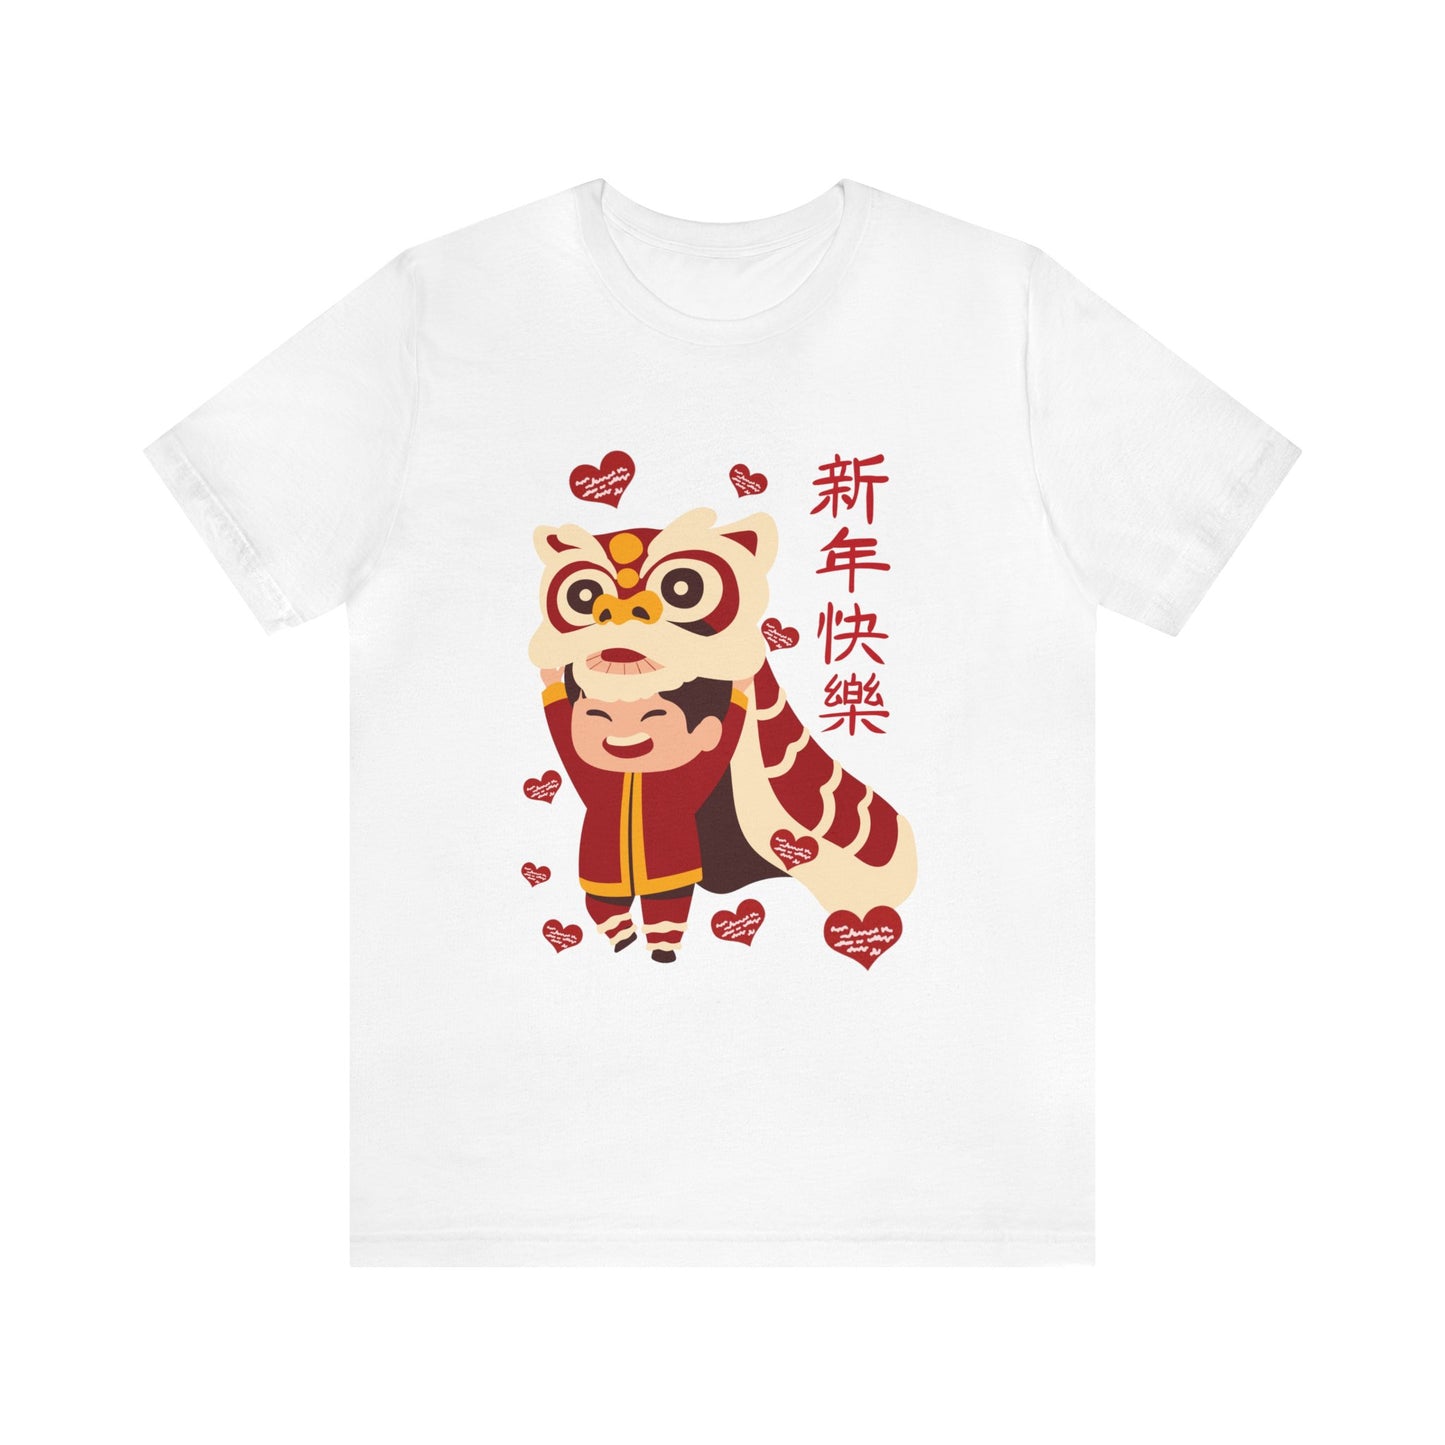 Unisex Happy Chinese New Year Dragon Dance T-shirts